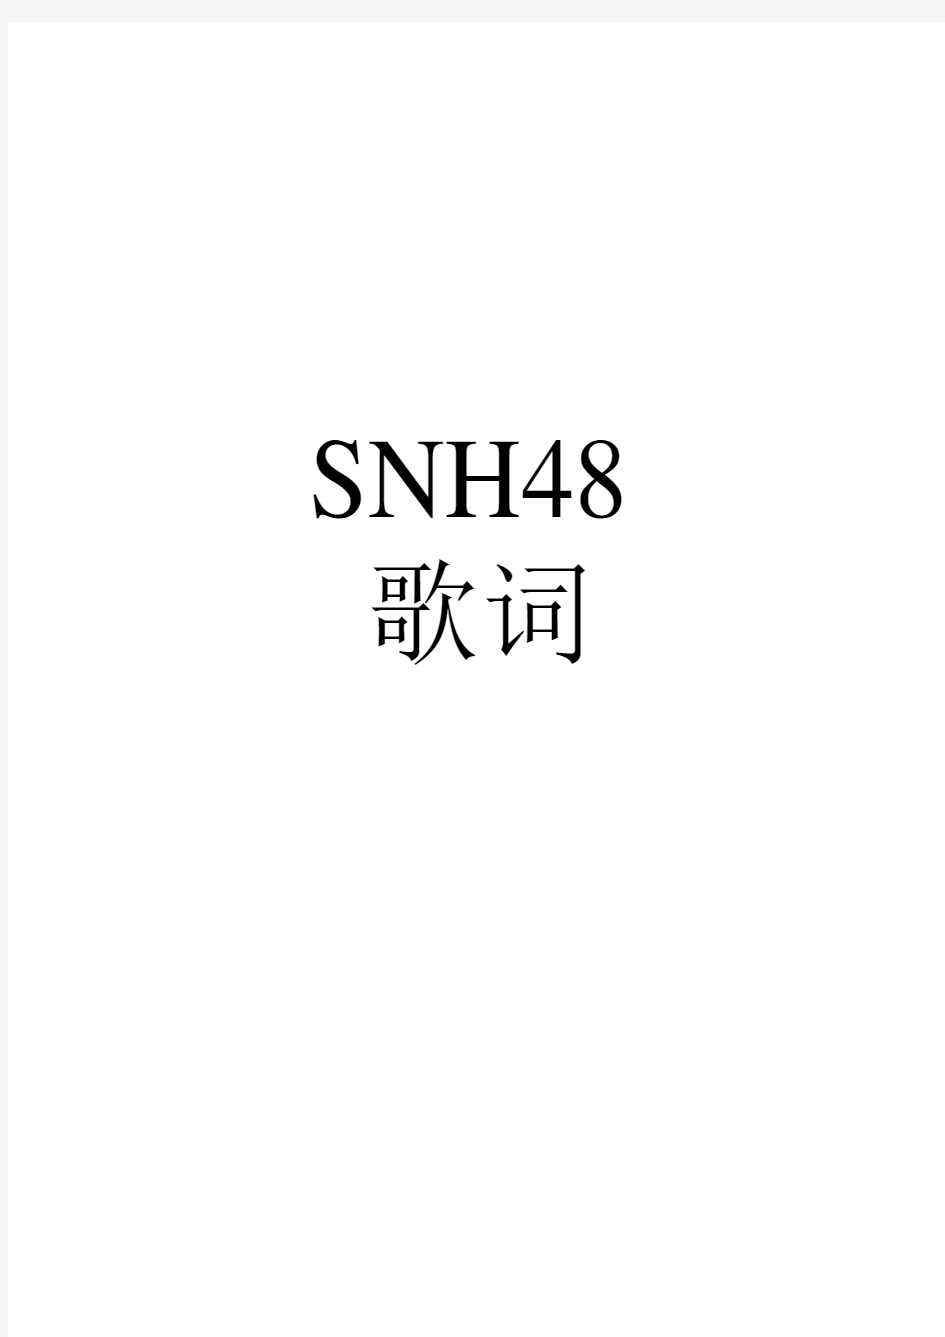 SNH48歌词